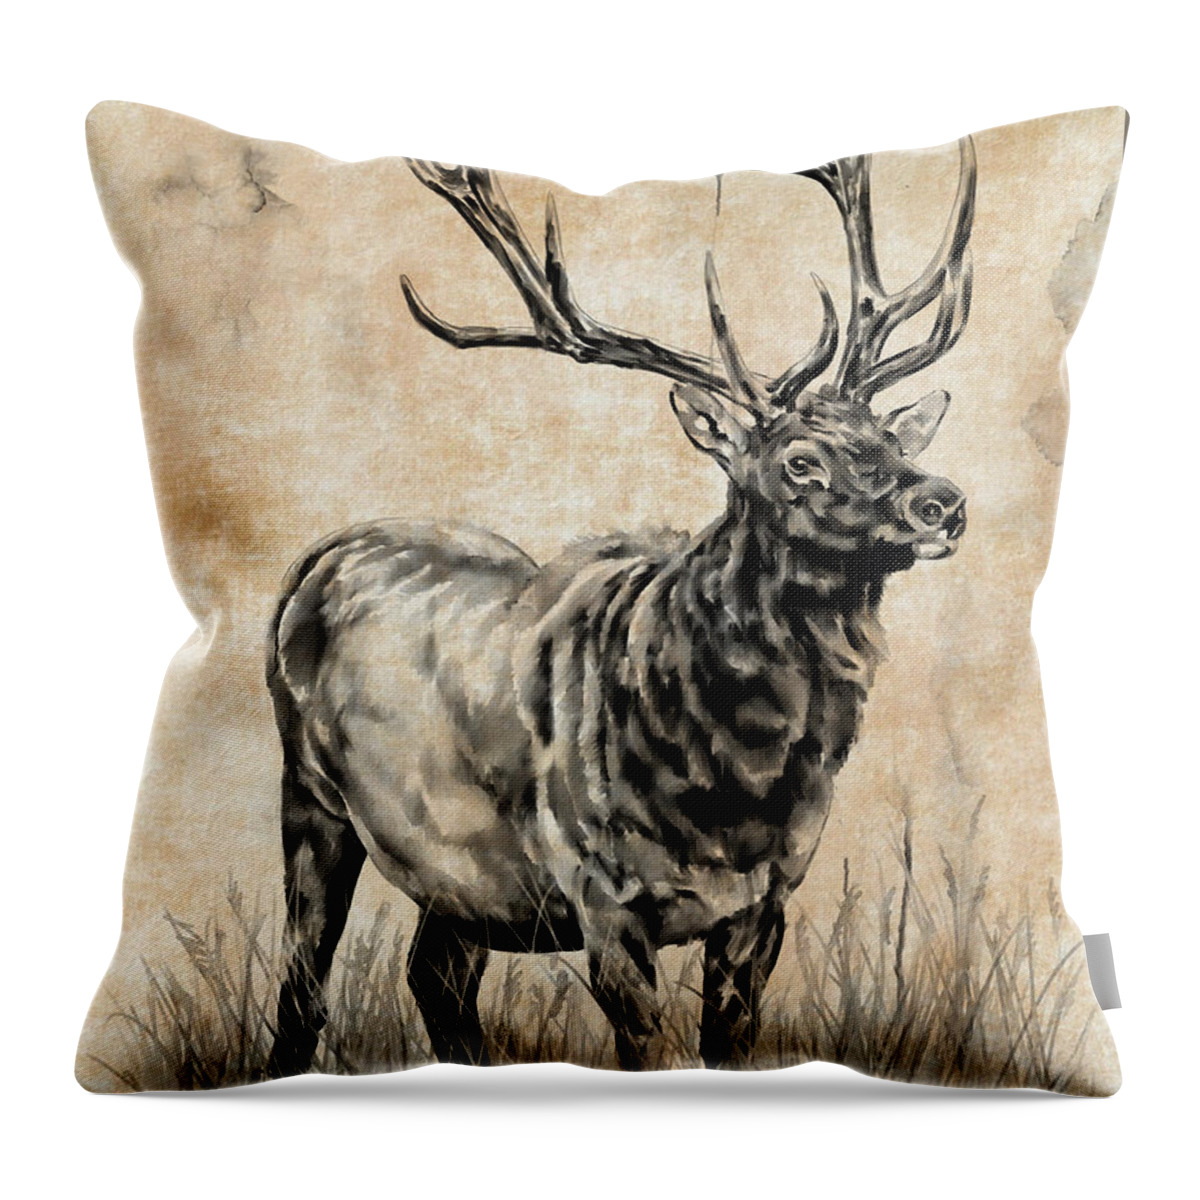 Elk Throw Pillow featuring the digital art An Elk Study by Shawn Conn